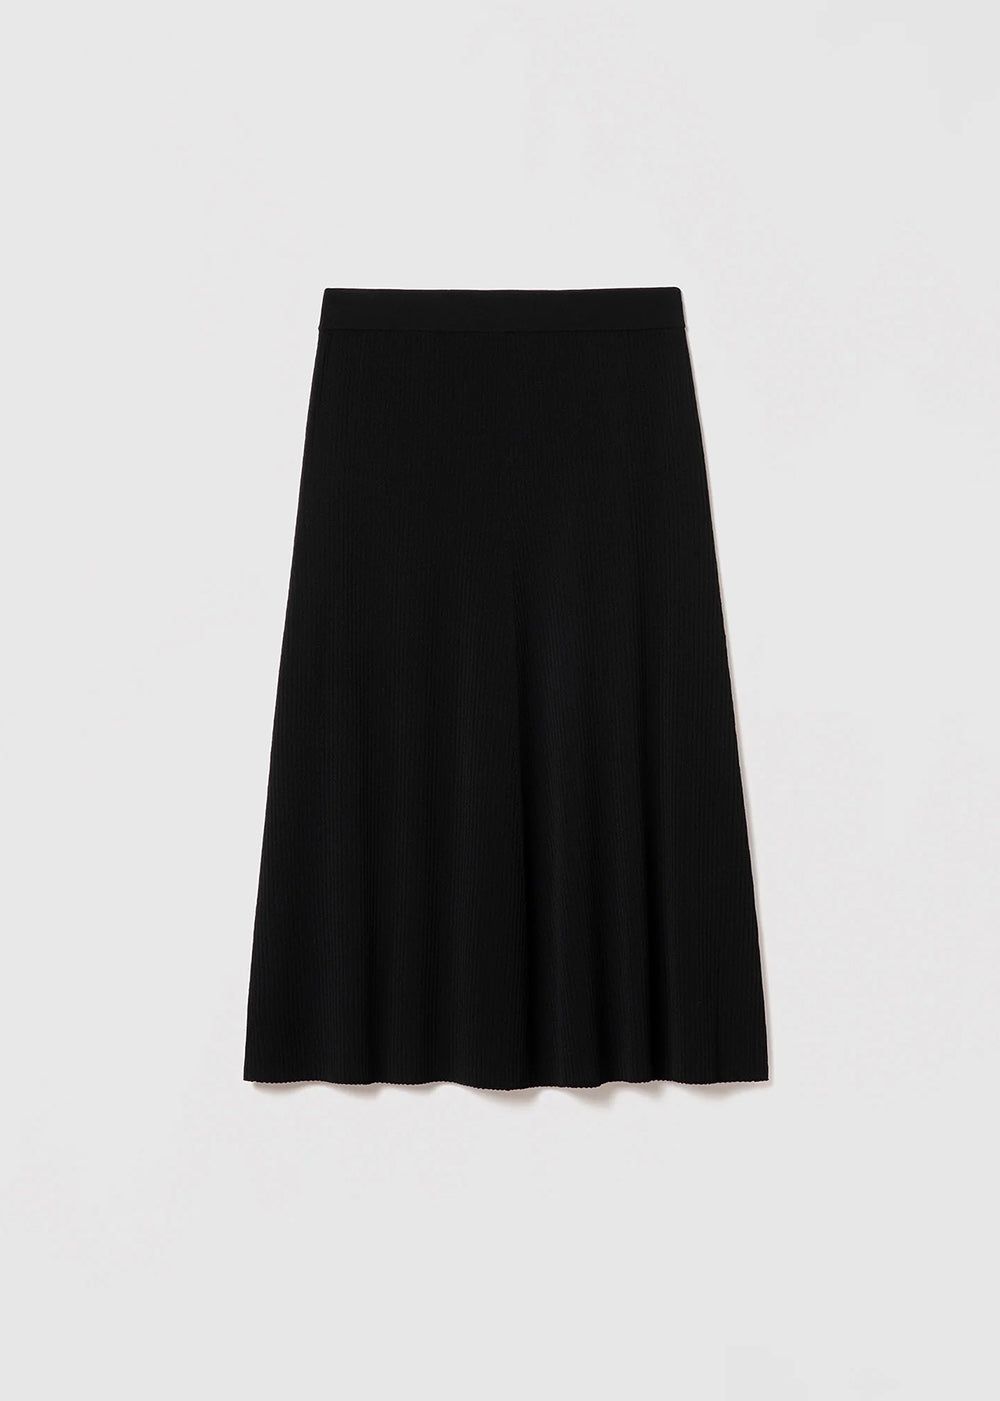 Lecco Skirt - Black - Judith & Charles - Danali - 254-4069